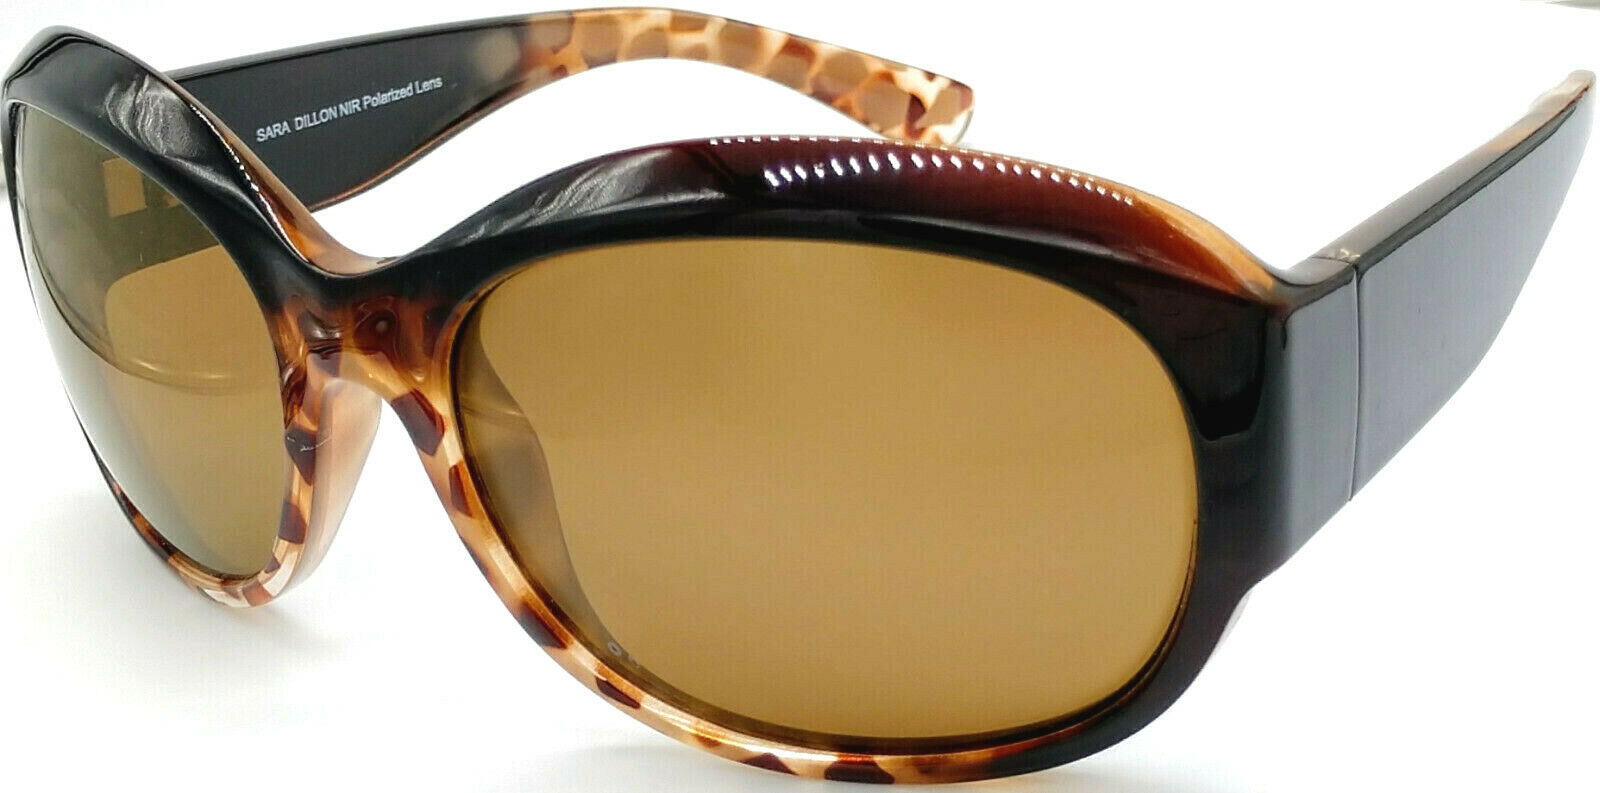 Ray-Ban Hexagonal Sunglasses 51mm - $59 (66% Off Retail) - From Sara